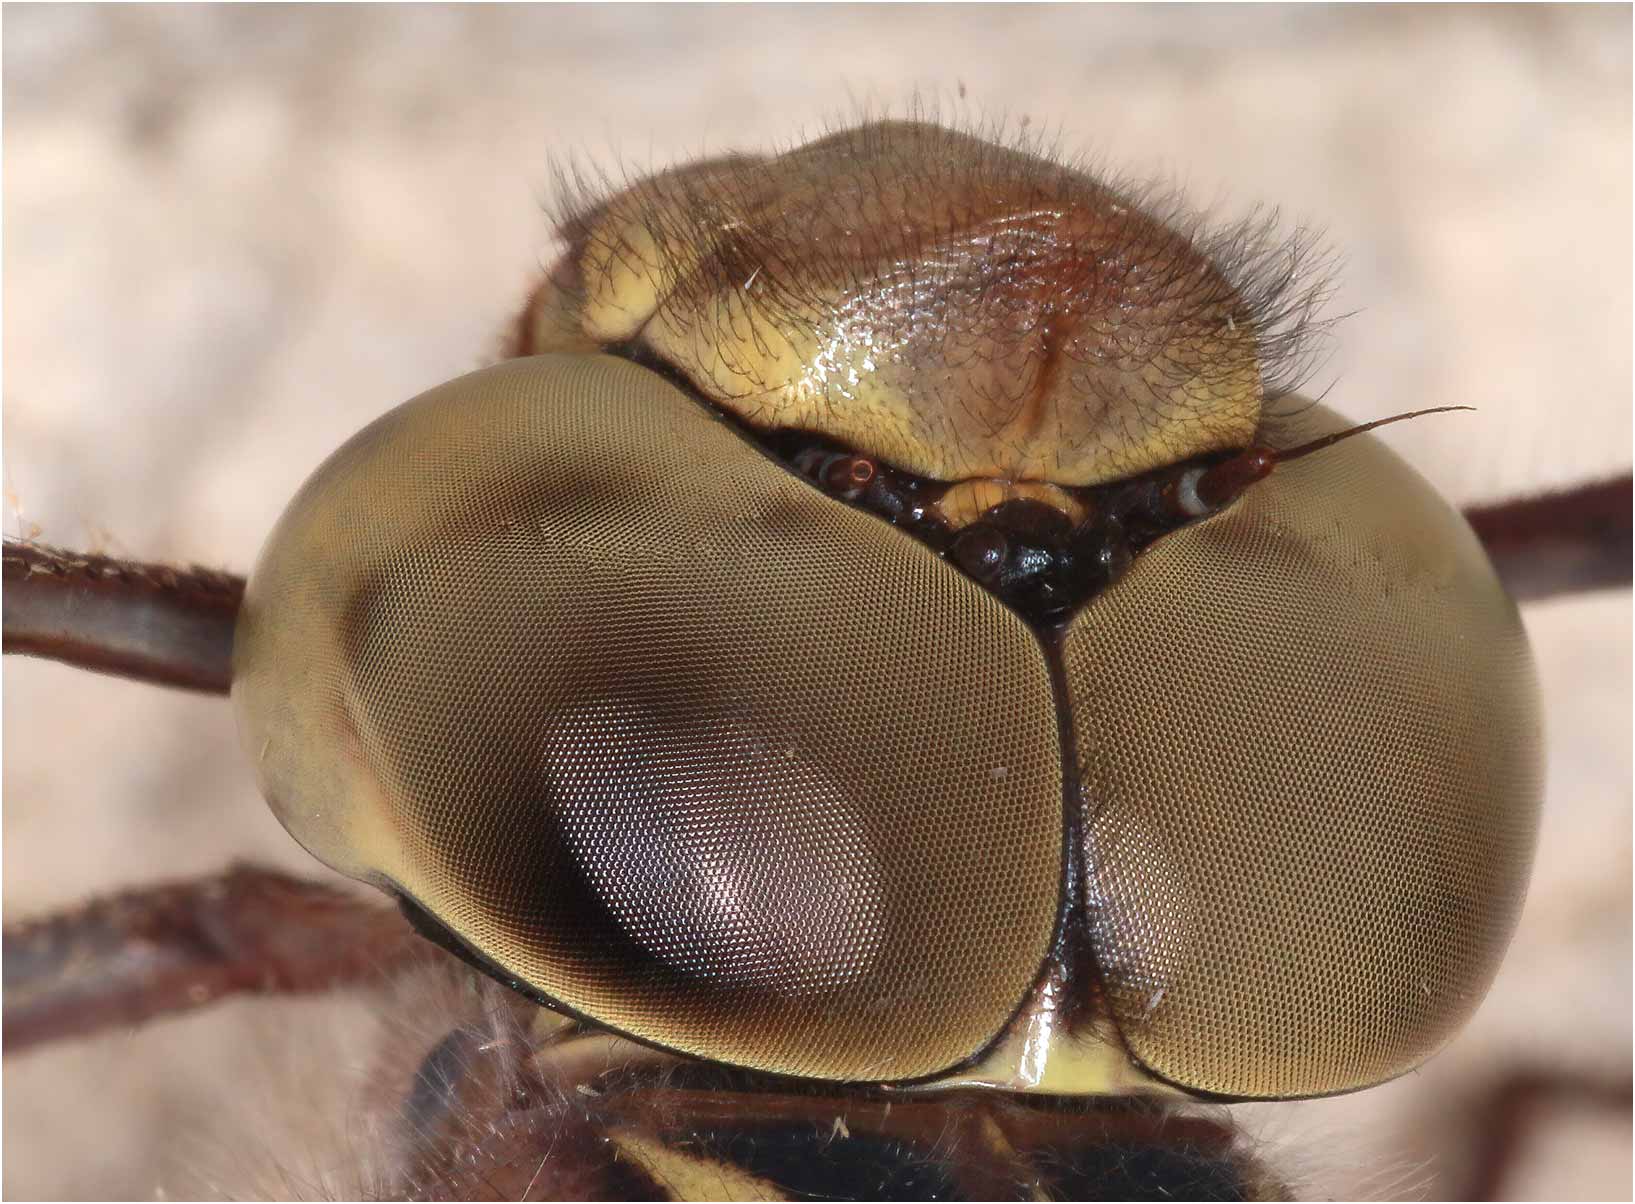 Boyeria irene femelle, Beaupréau (France-49), 30/06/2021